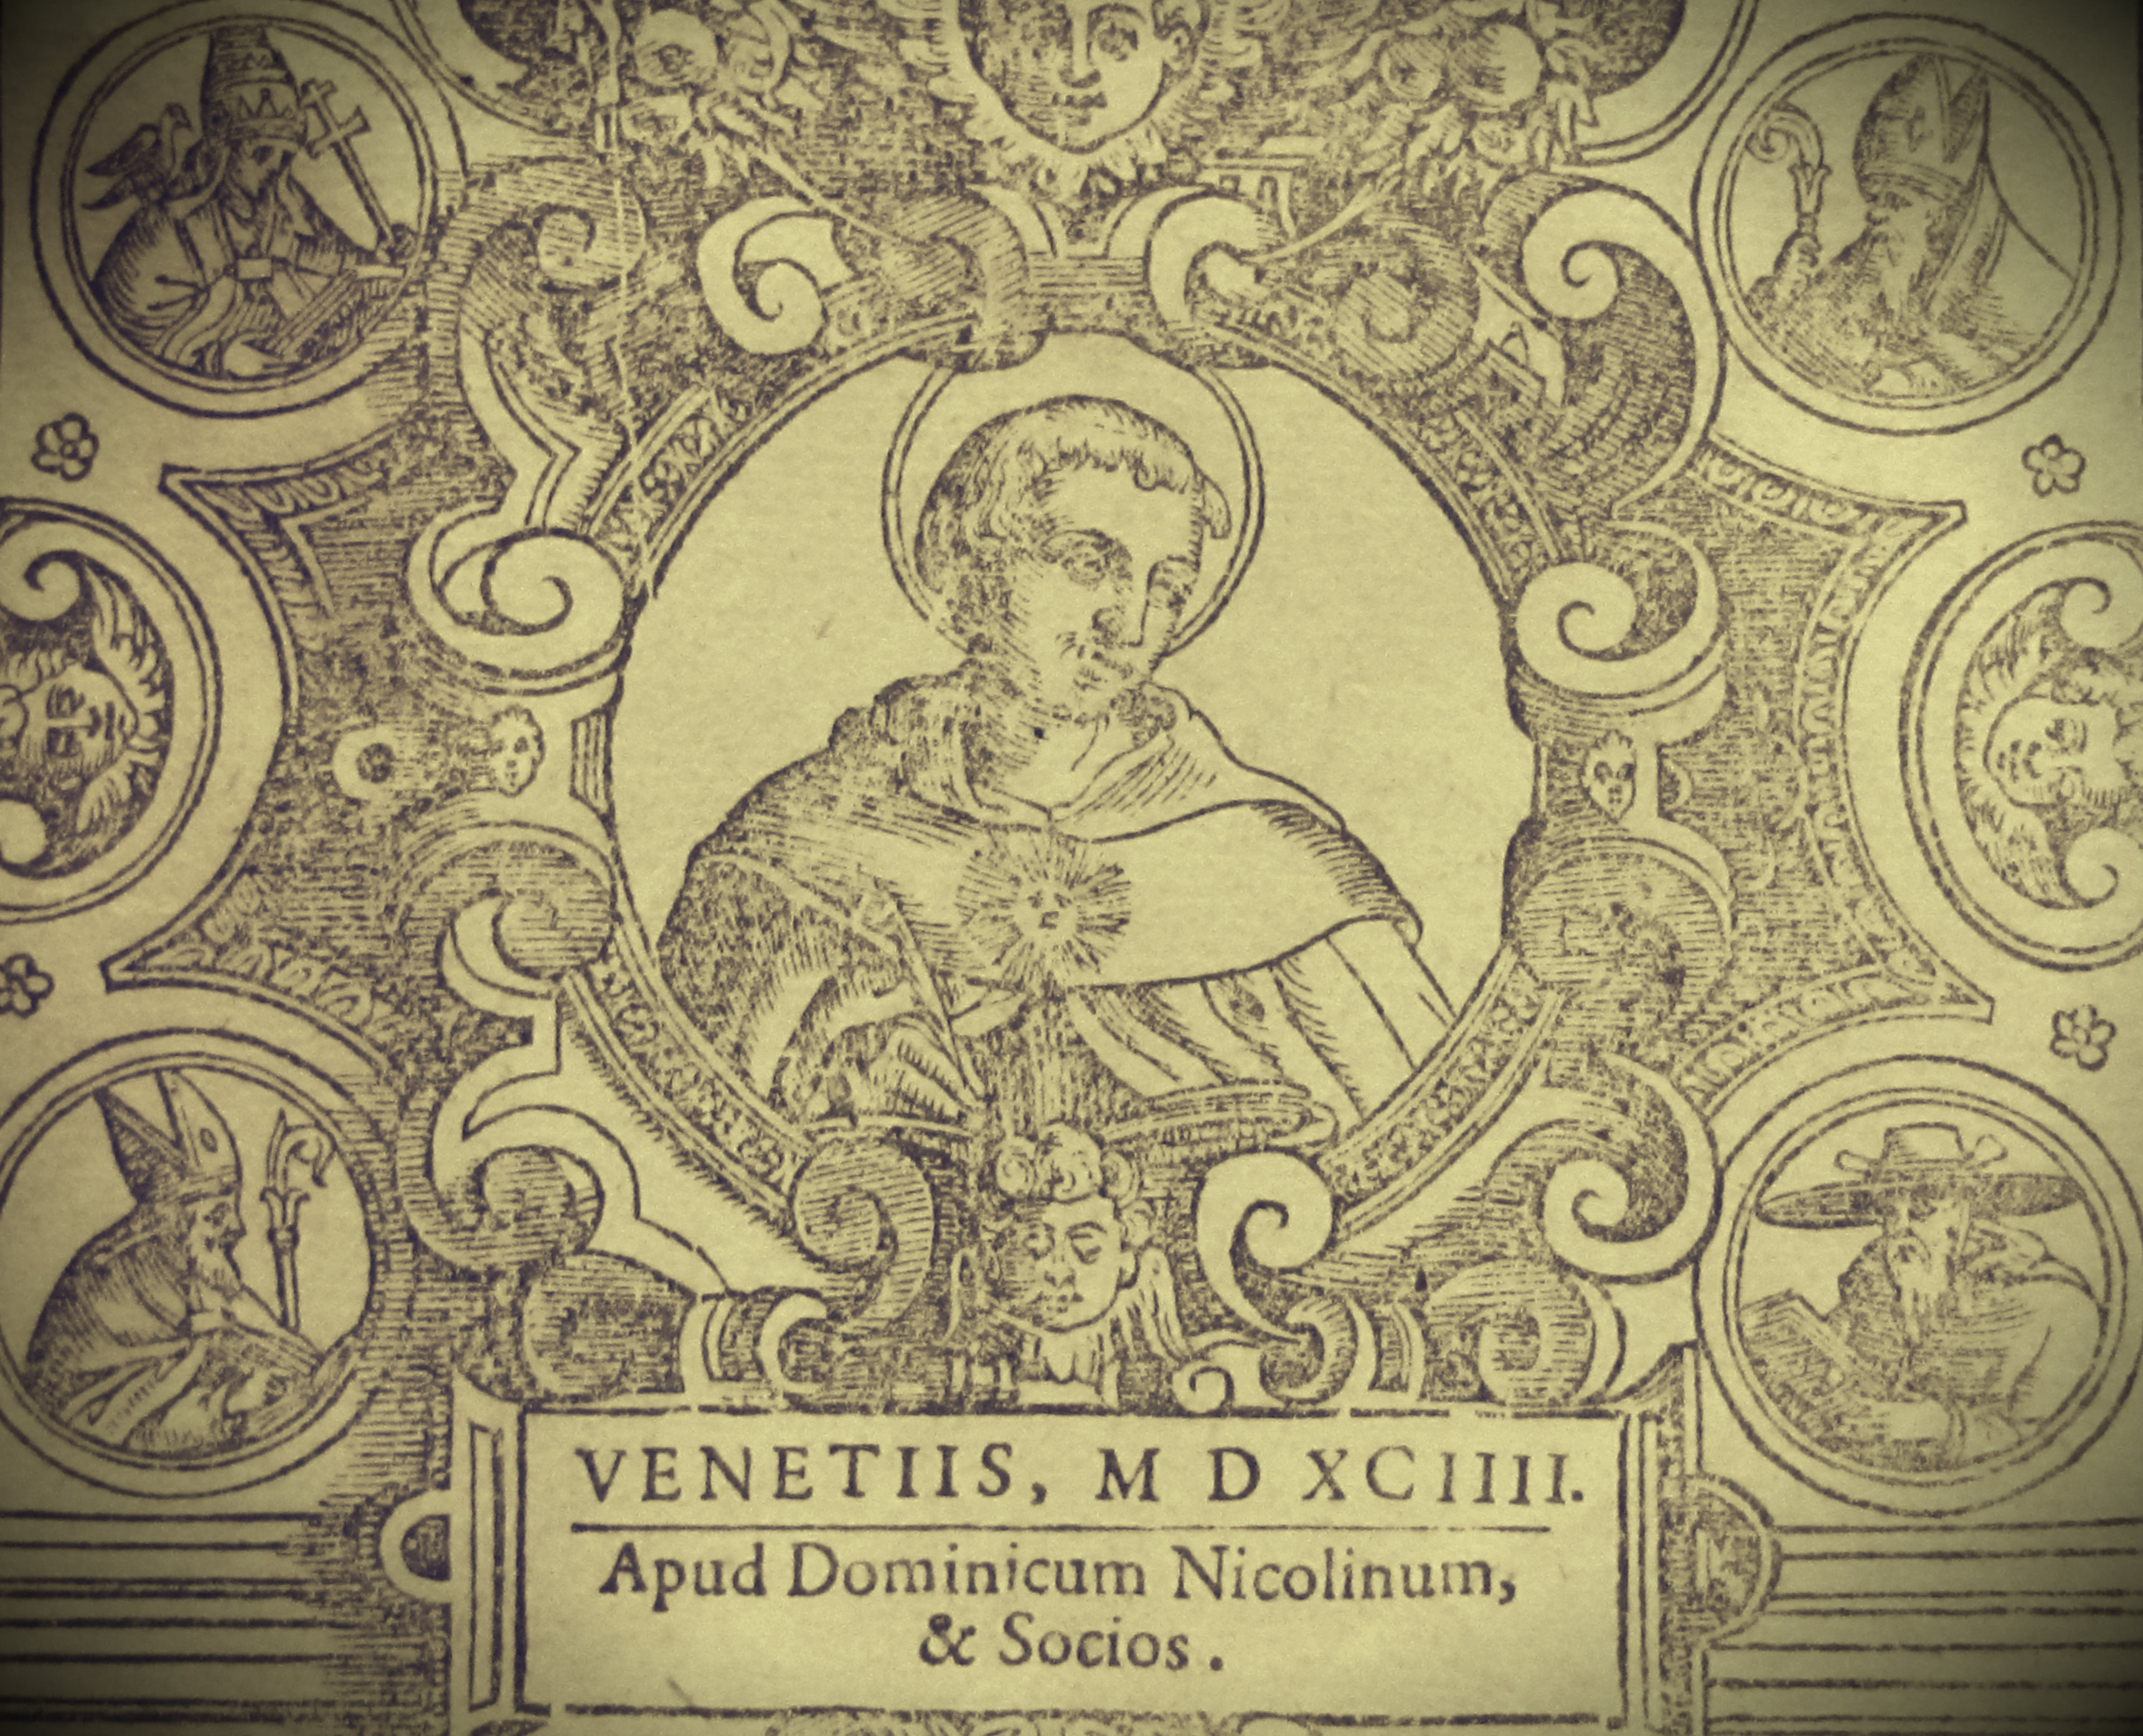 Santo Tomas de Aquino.